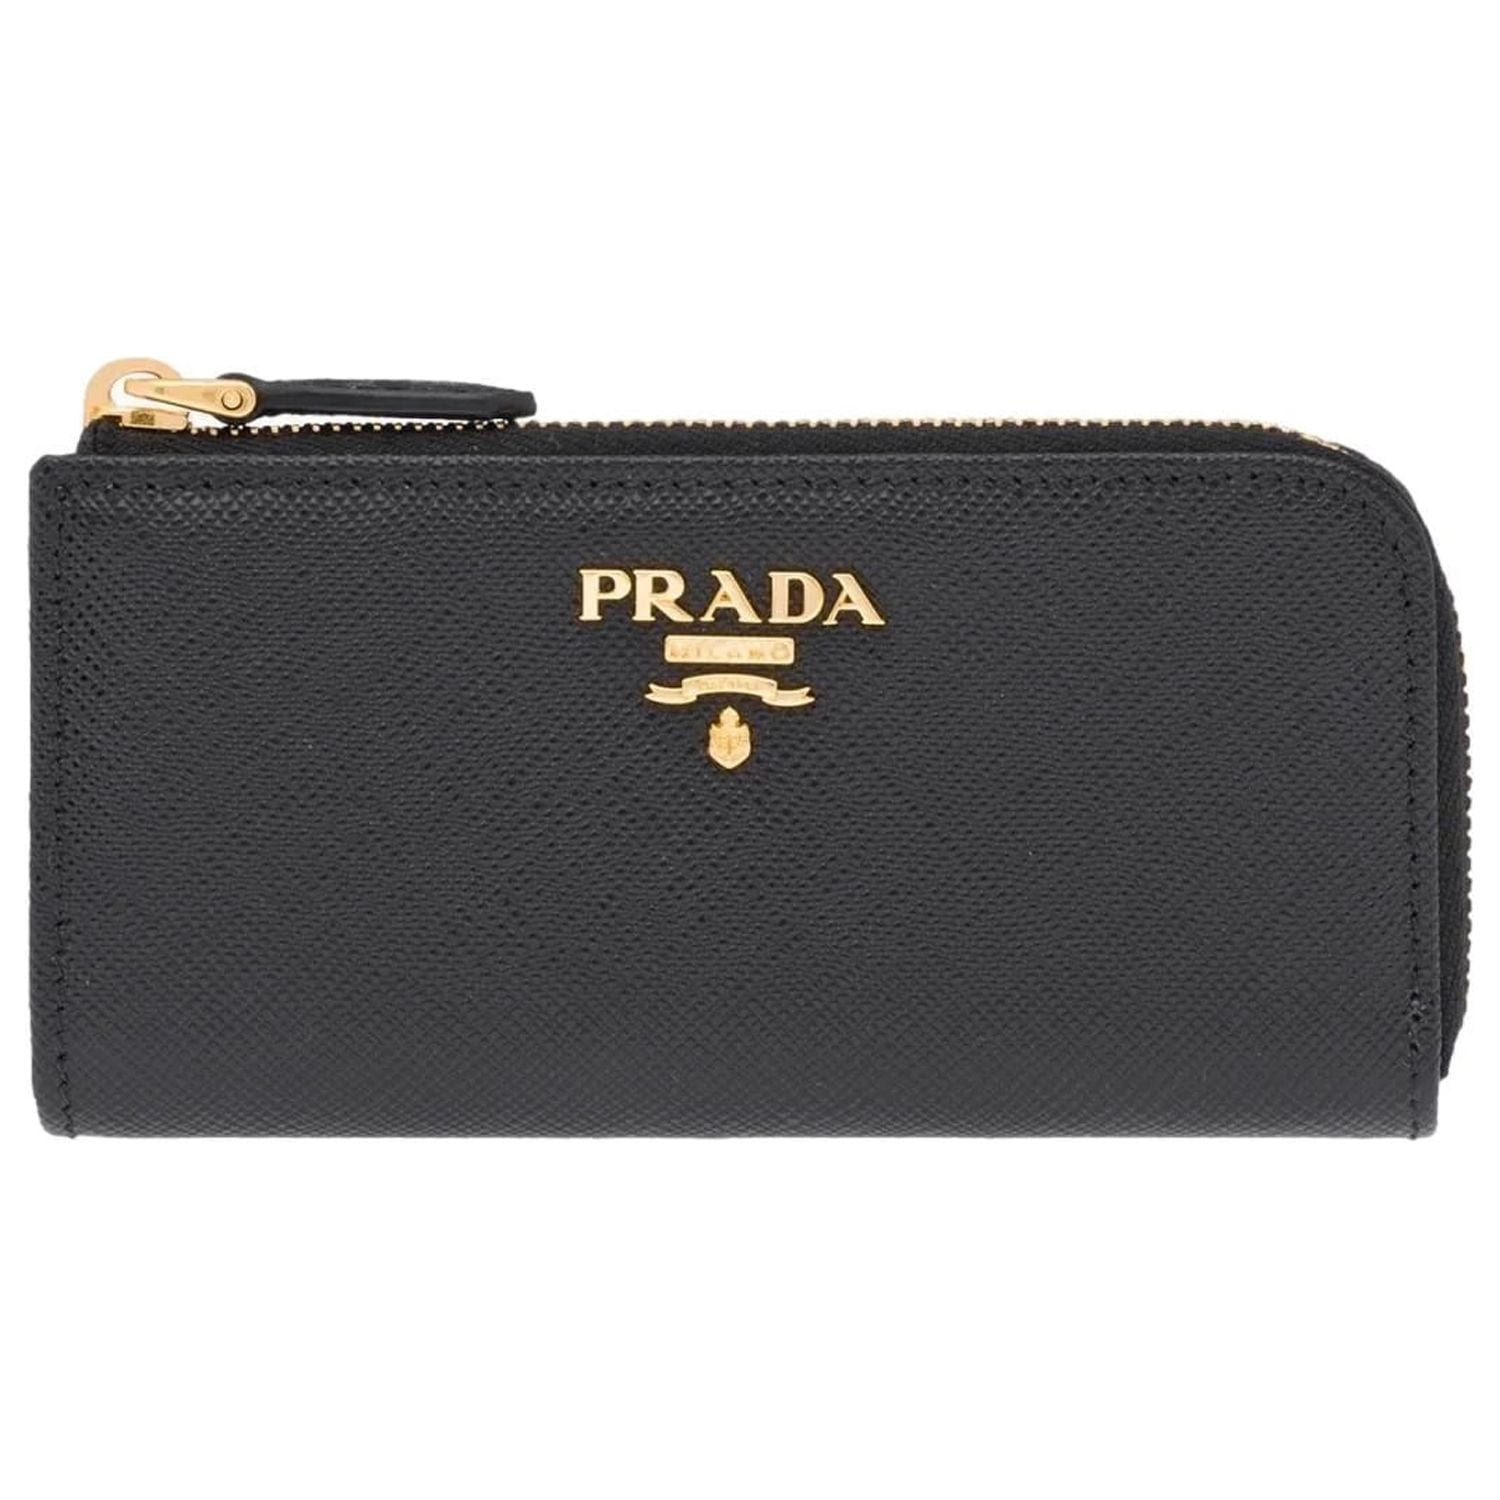 New Prada Satin Mini-Bag with Crystals | eBay